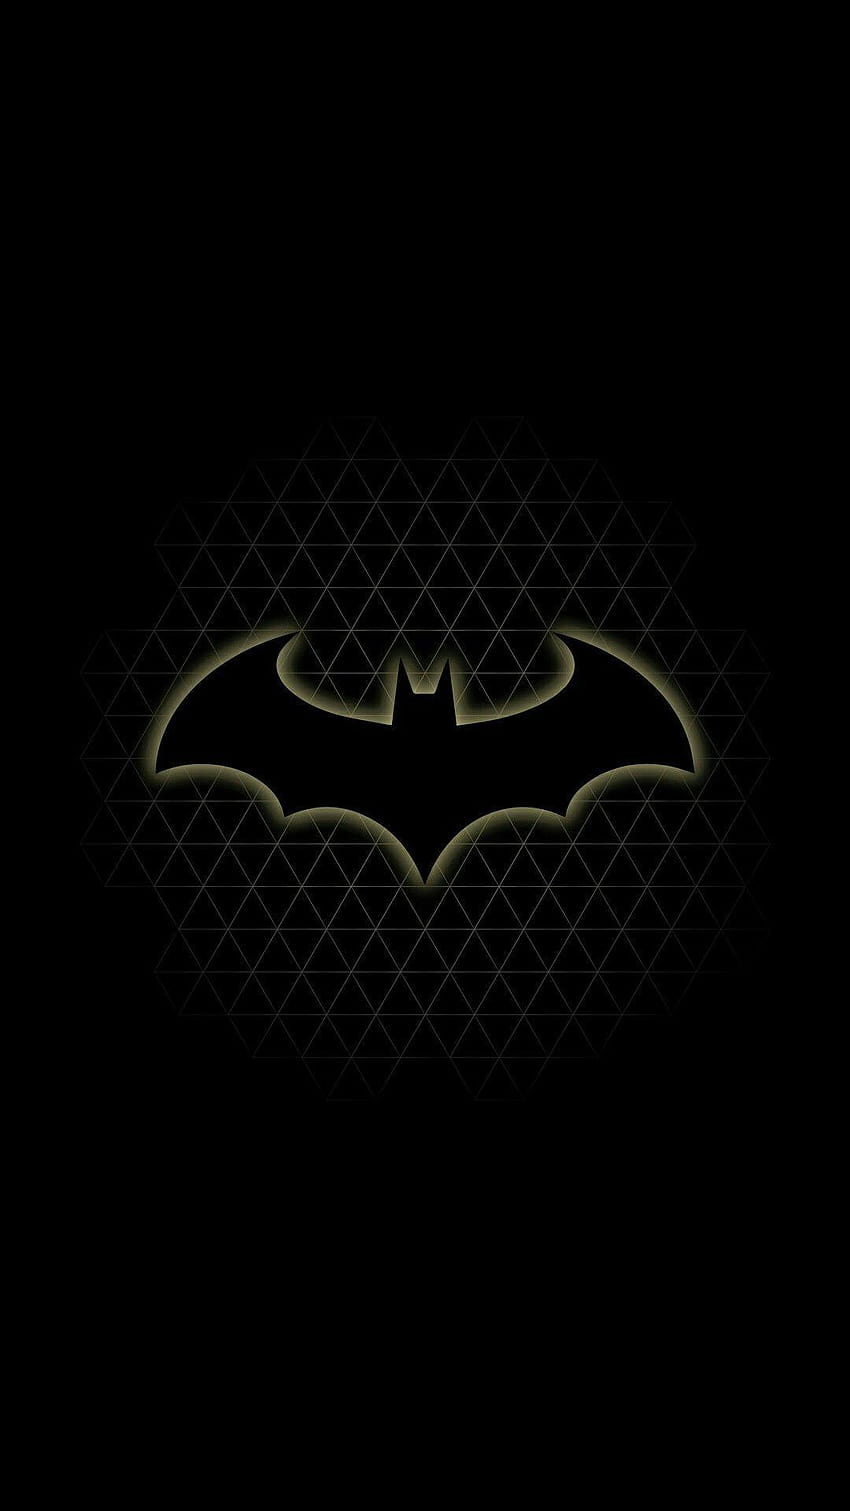 Dark Knight logo | Batman wallpaper iphone, Batman wallpaper, Batman  backgrounds